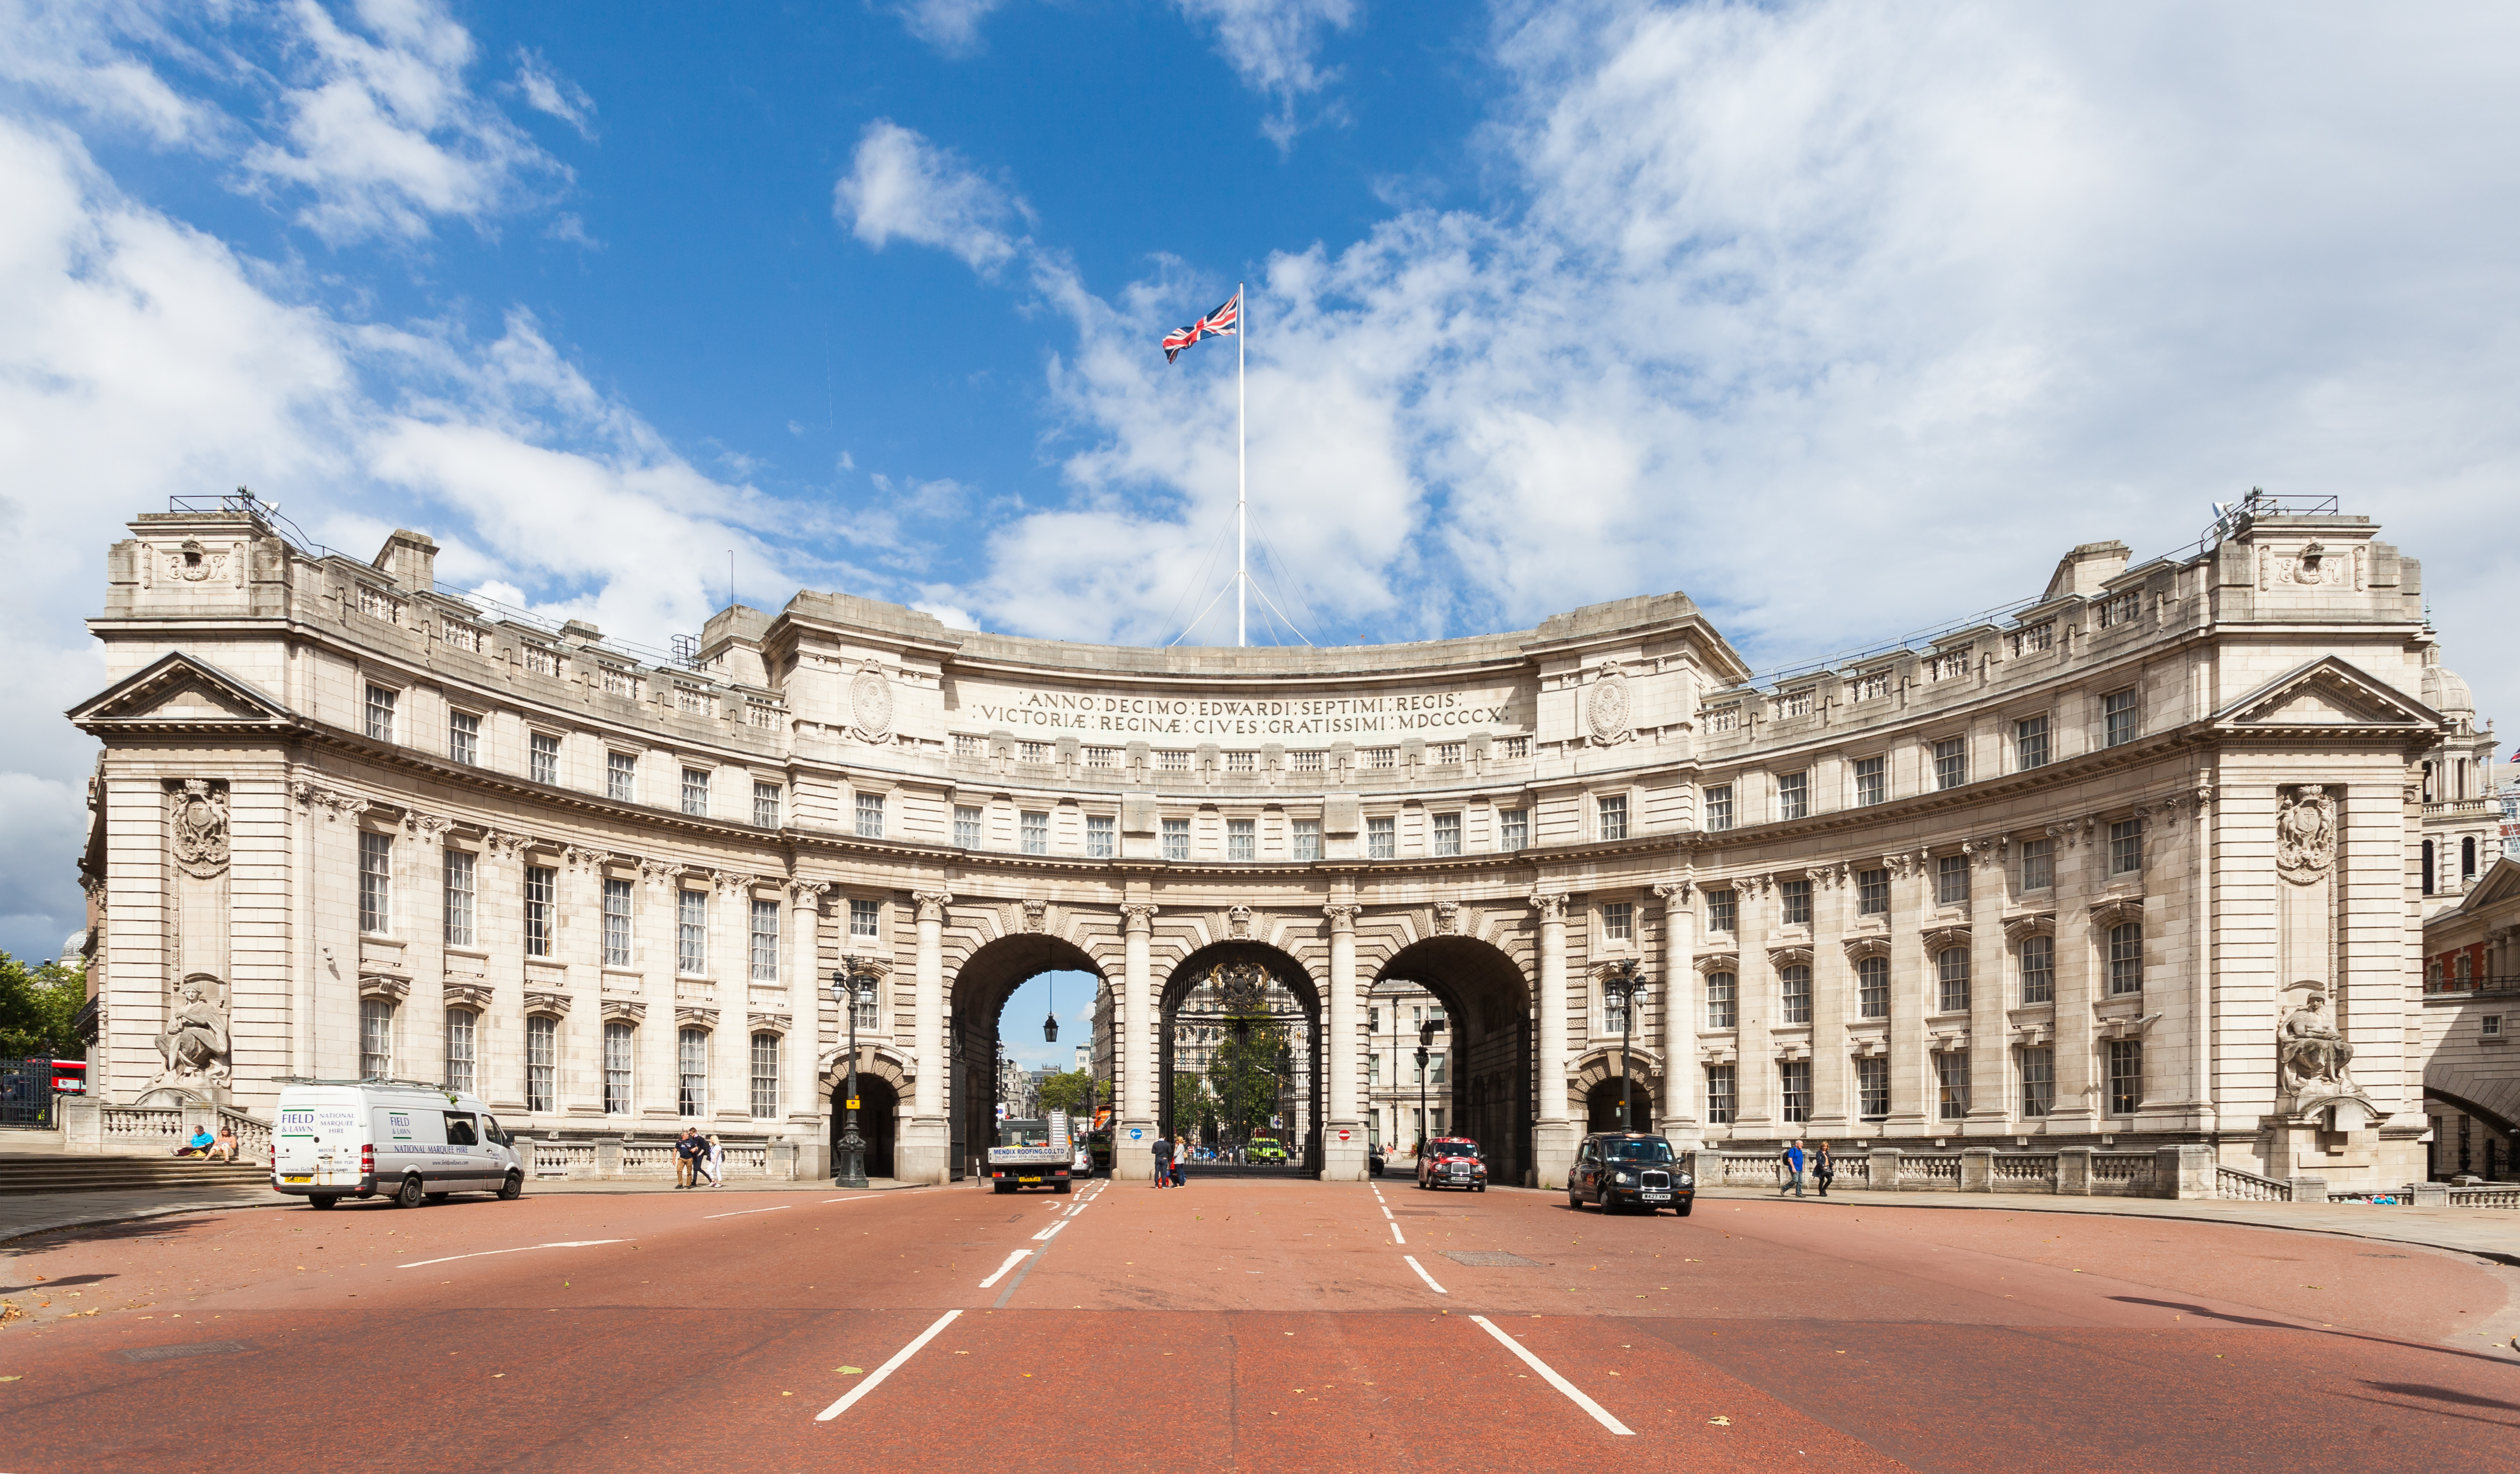 Arco del Almirantazgo, Londres, Inglaterra, 2014-08-11, DD 186